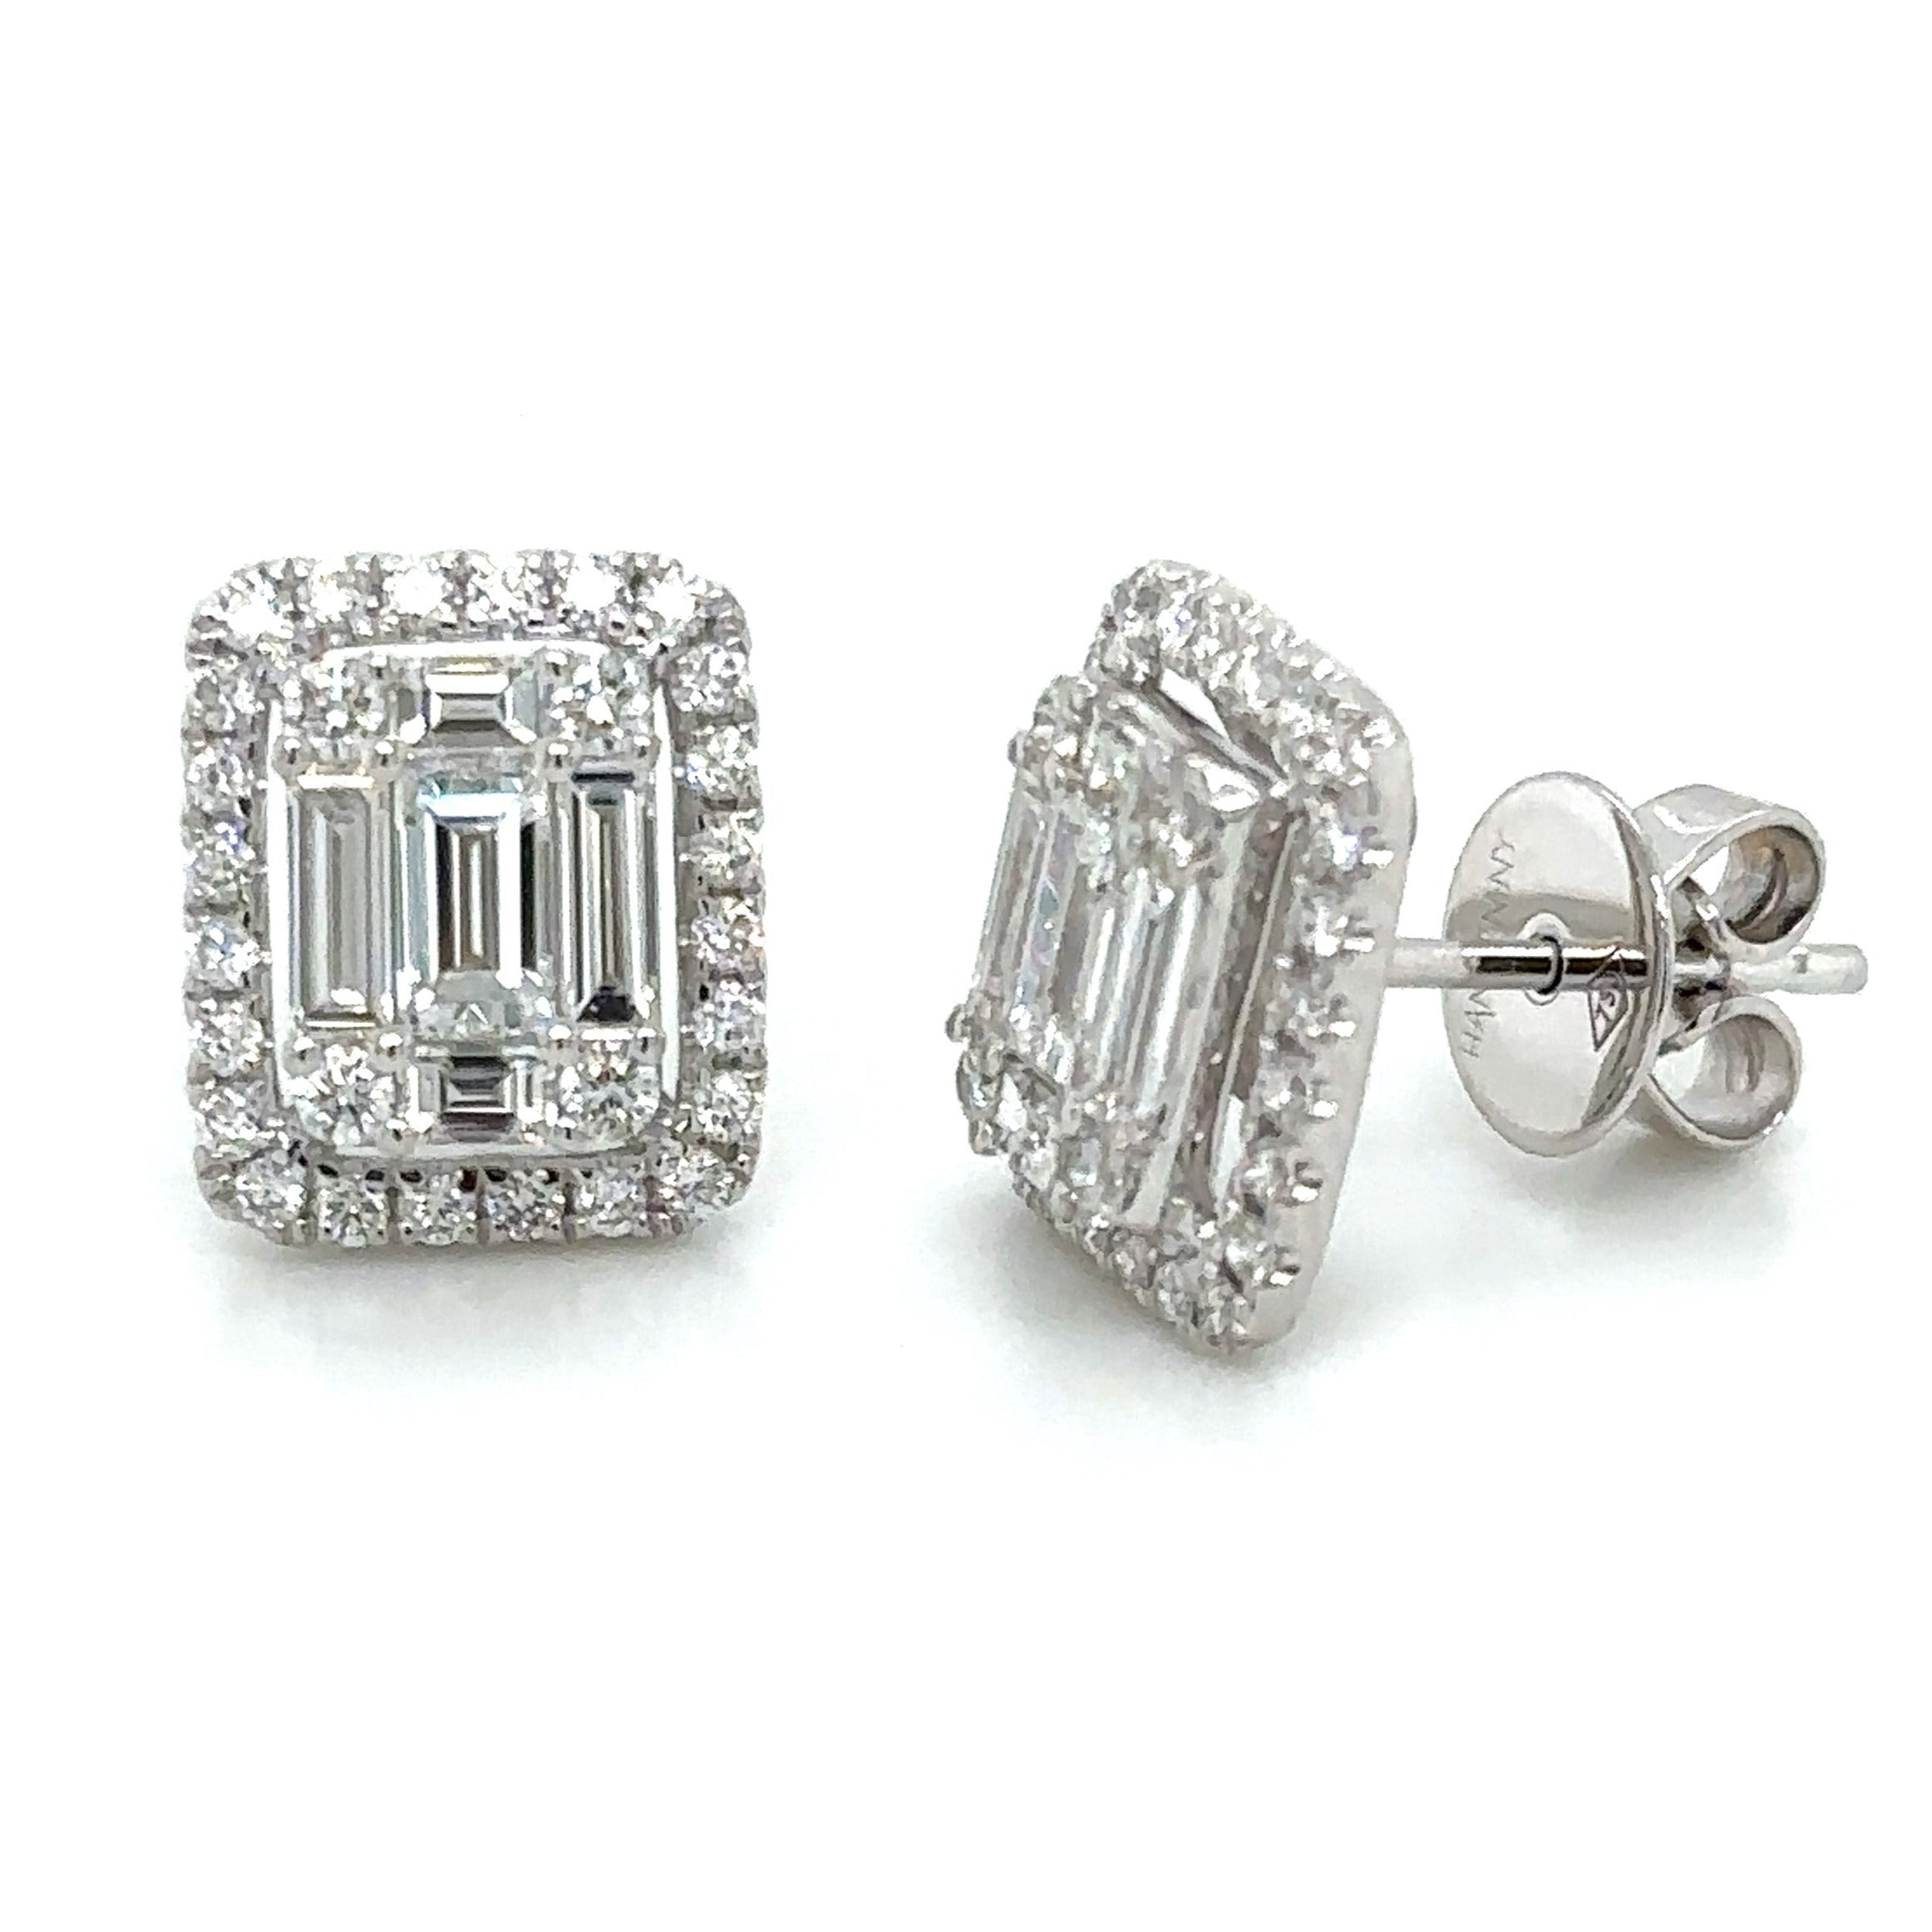 1.42ct tw Ladies Diamond Stud Earrings with Rounds & Baguette-cut Diamonds